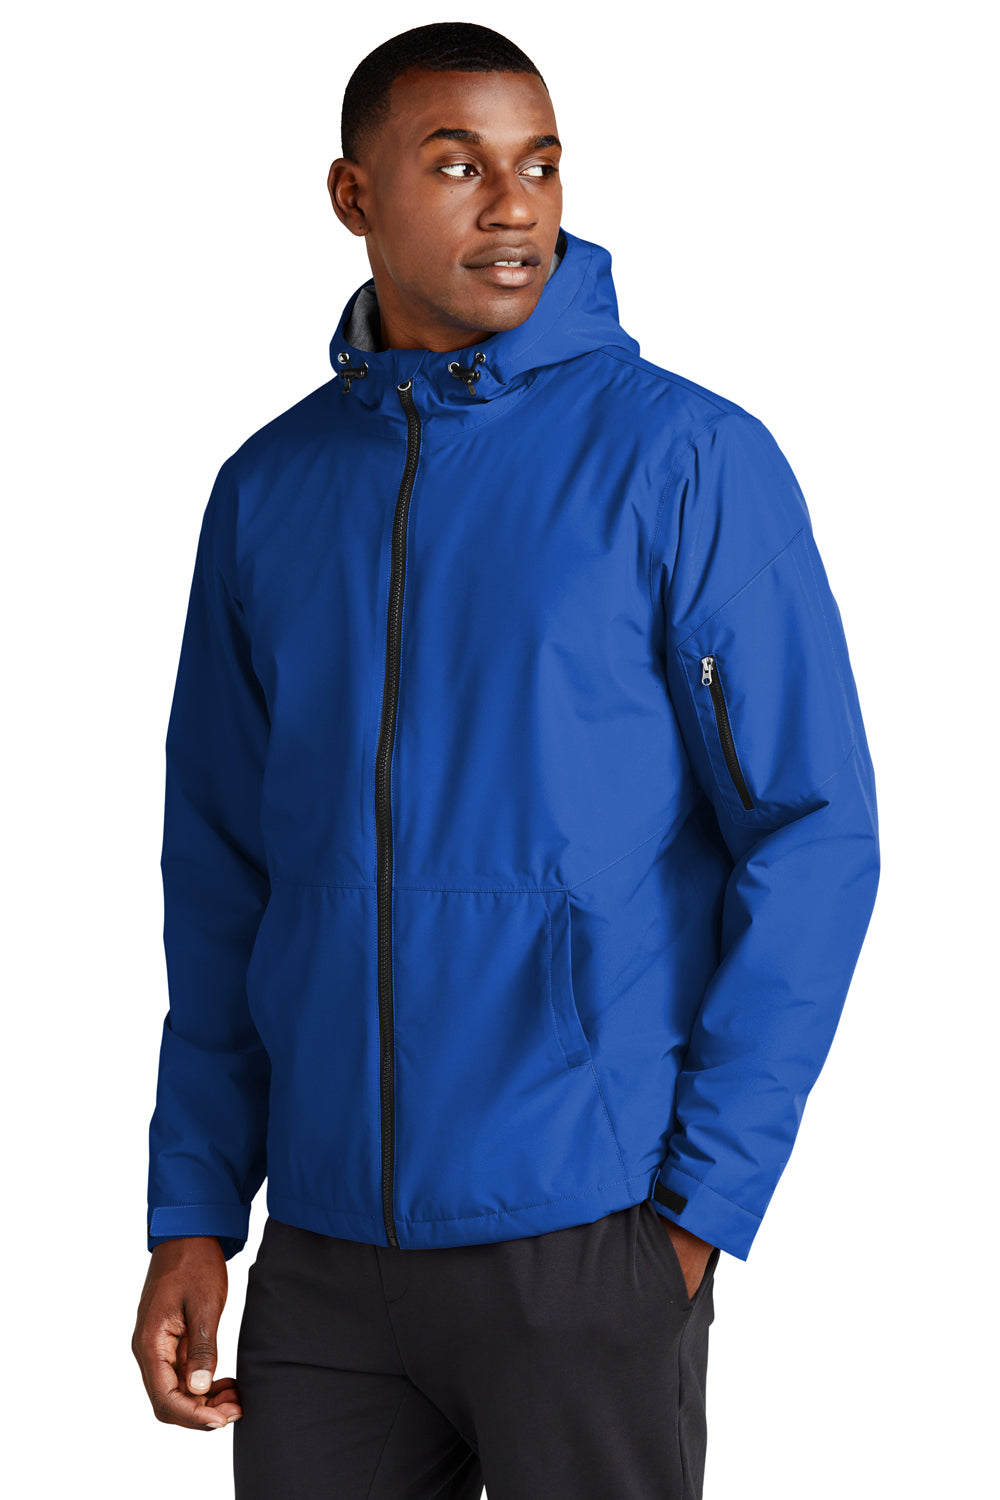 Sport-Tek JST56 Waterproof Insulated Full Zip Hooded Jacket True Royal Blue 3Q